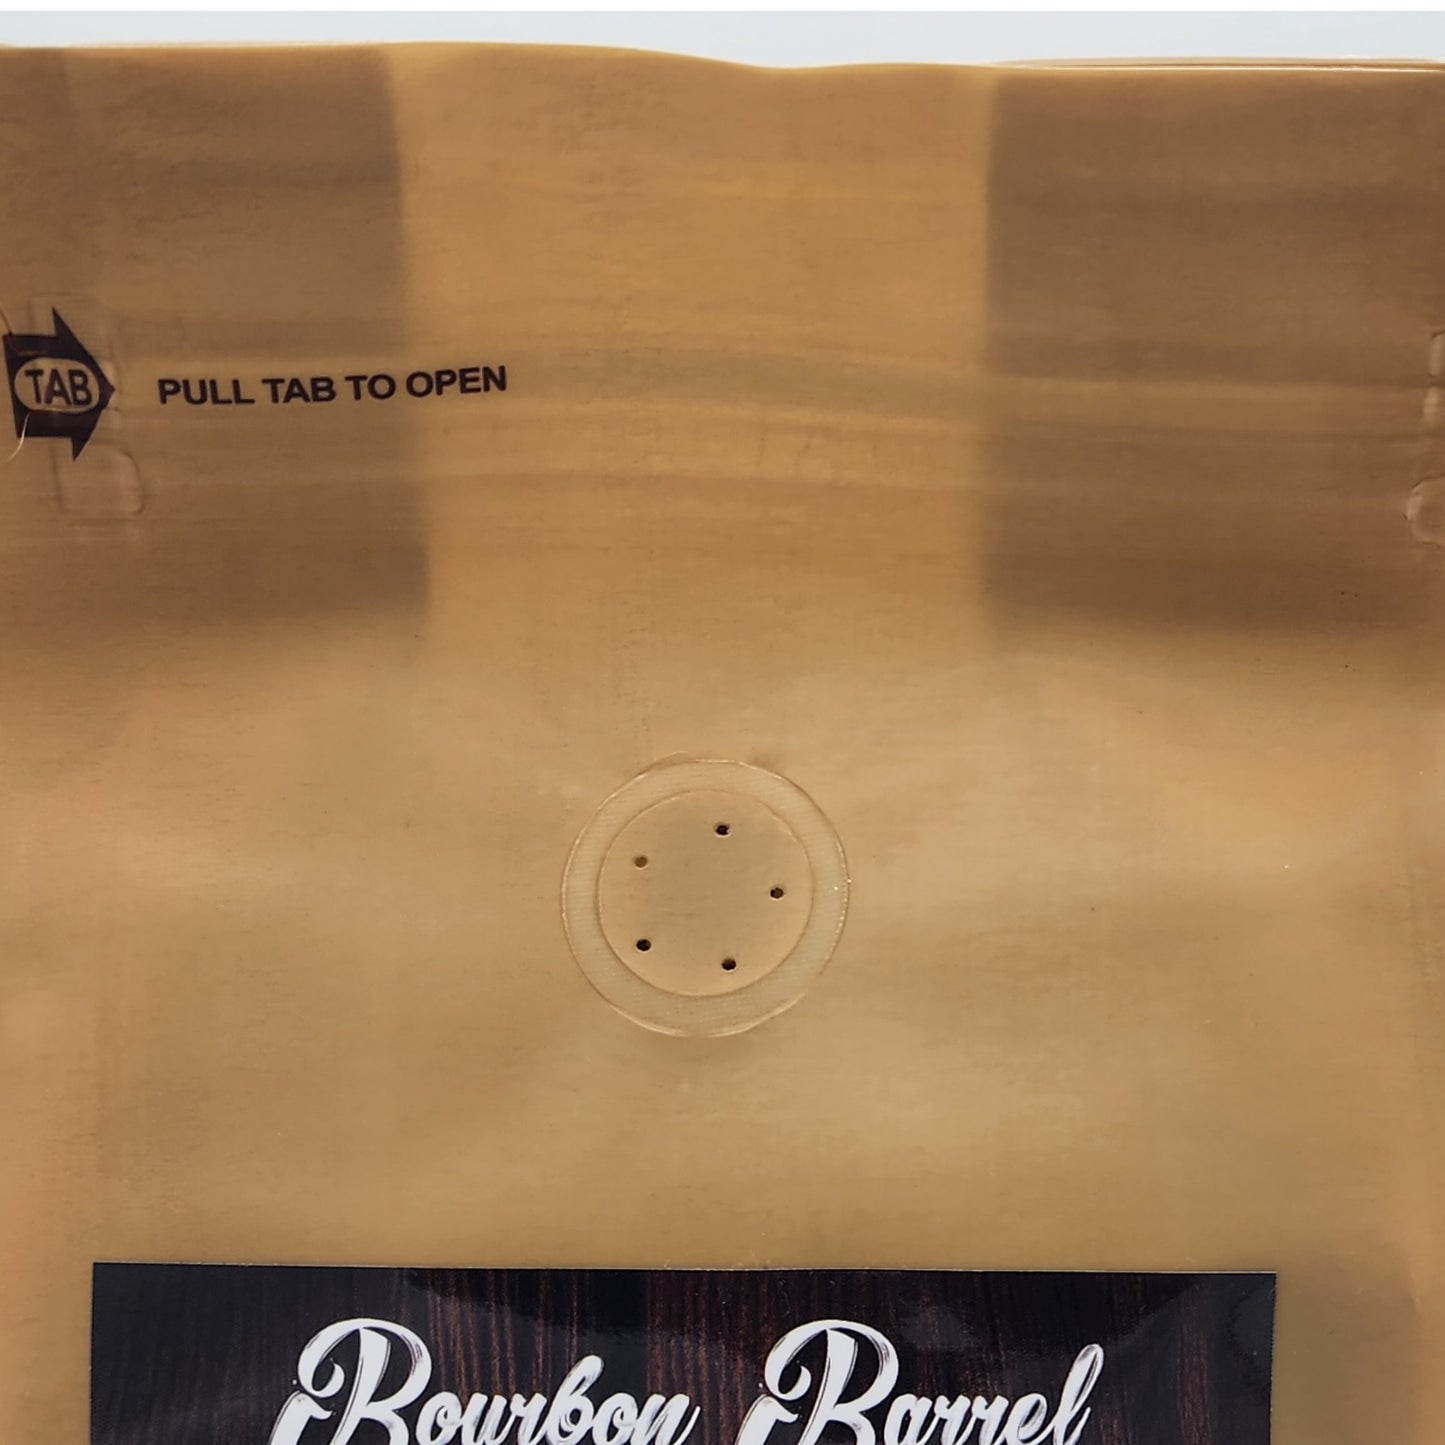 3 Pack Organic Bourbon Barrel Roasted Coffee Beans 10oz, Limited Edition Barrel